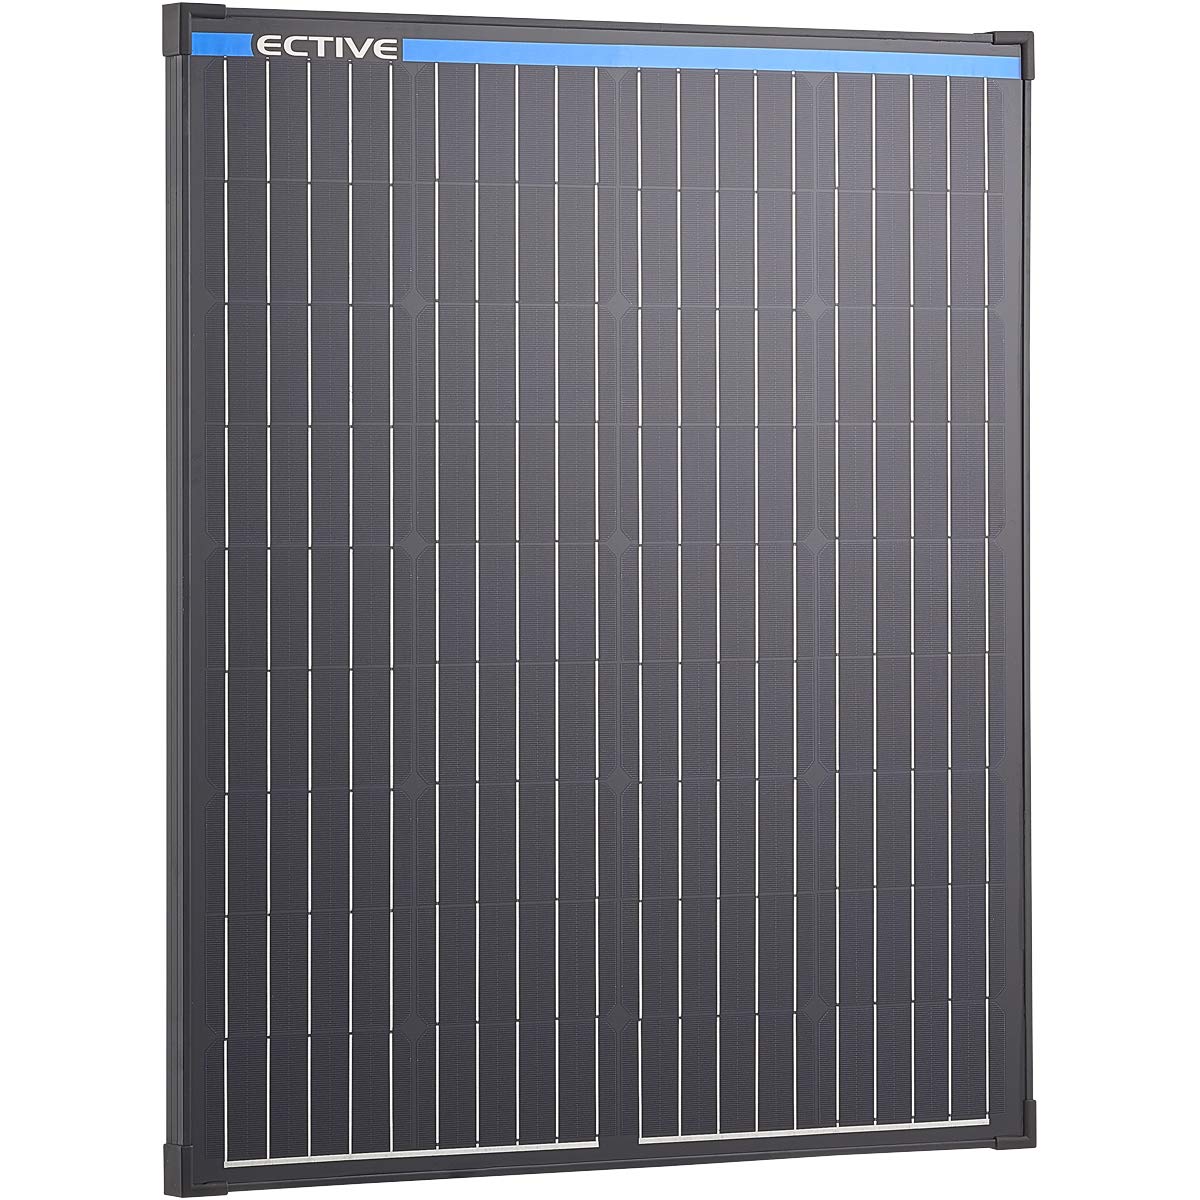 ECTIVE Solarpanel MSP 100 Black - 100W, 5,31A, 36 Zellen, für 12V 24V Batterieladeregler - Monokristallines Solarmodul, Camping Garten Solaranlage für Powerstation, Solargenerator, Solarladegerät